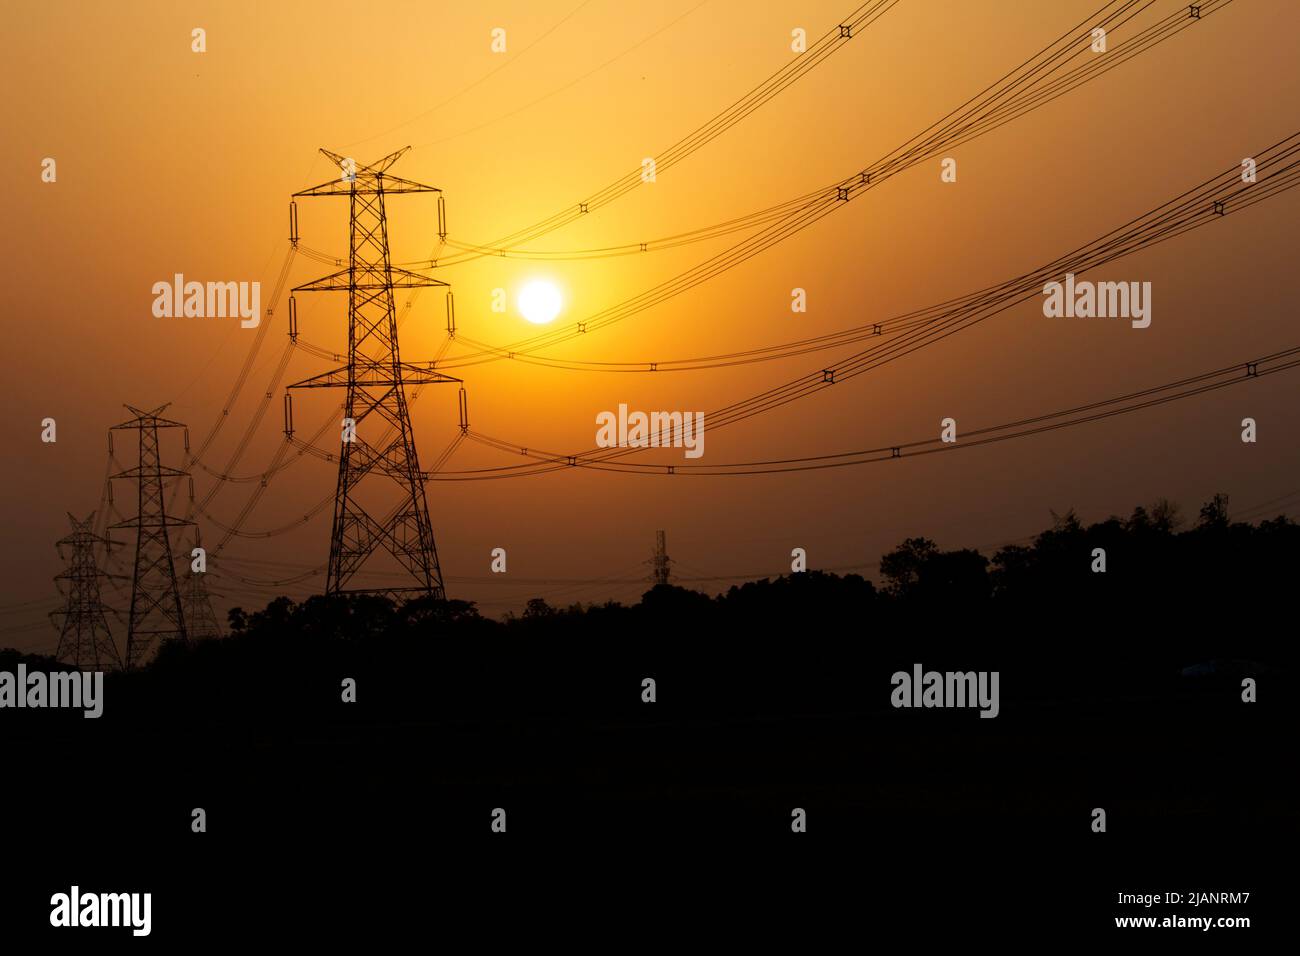 Electricity transmission network Stock Photo